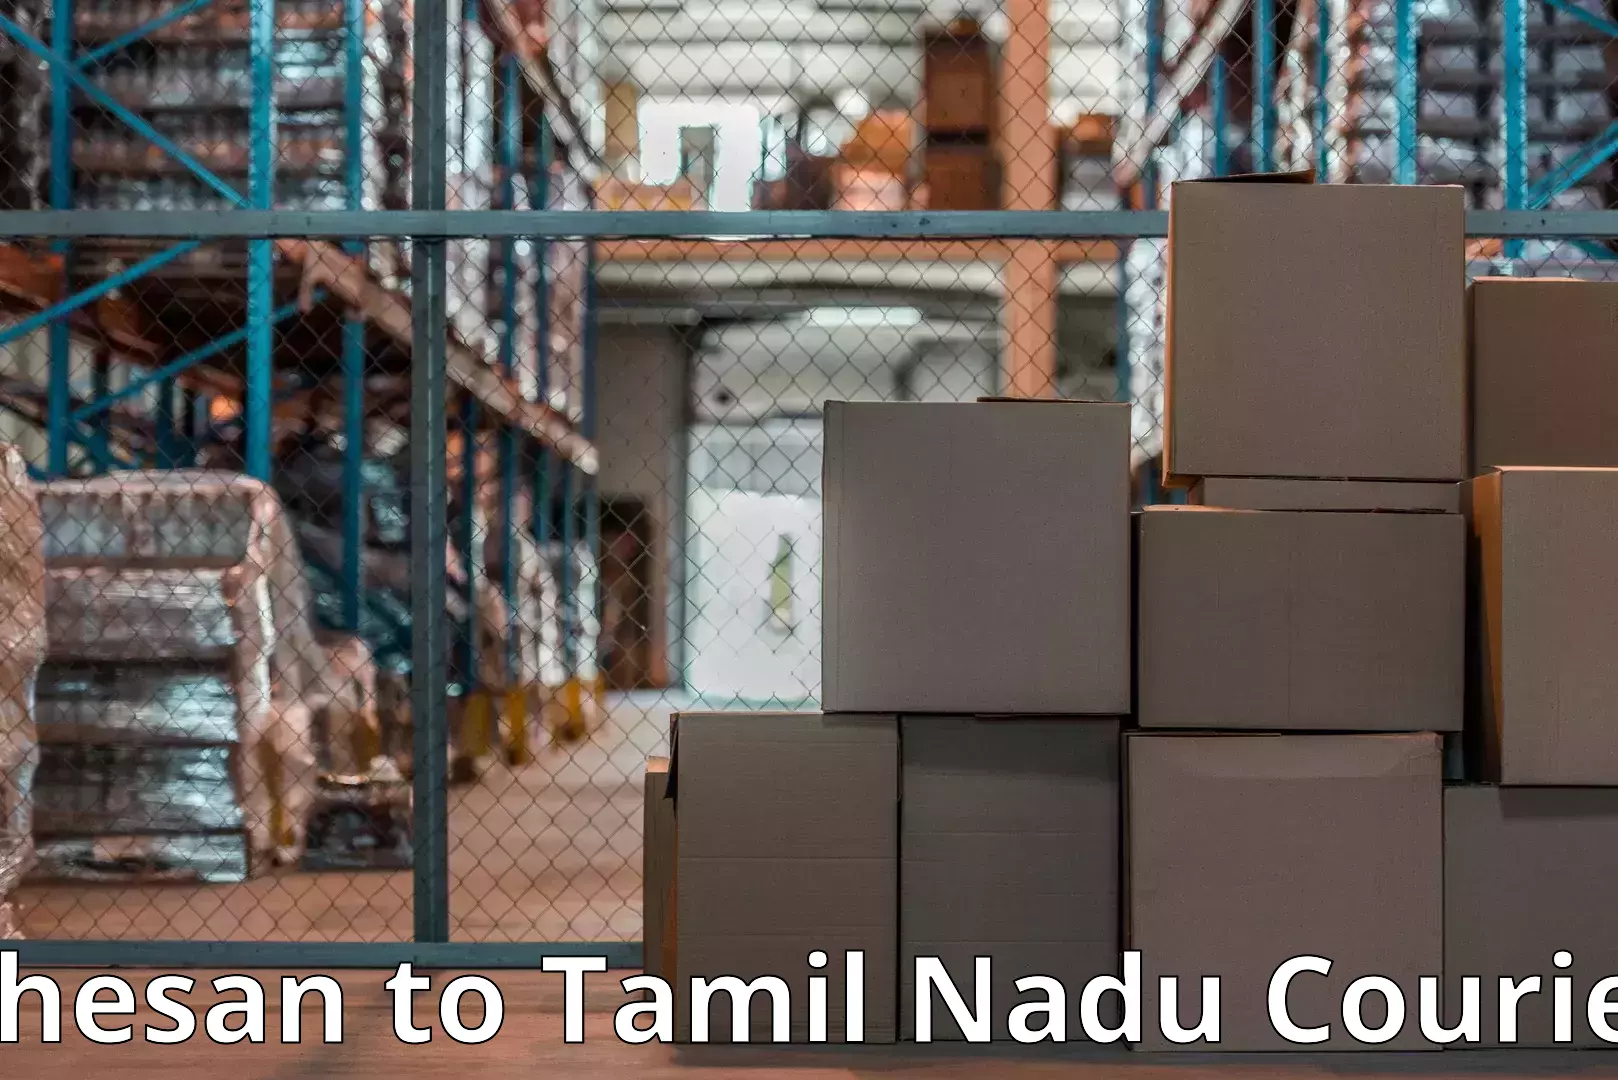 Quality relocation assistance Bhesan to Tamil Nadu